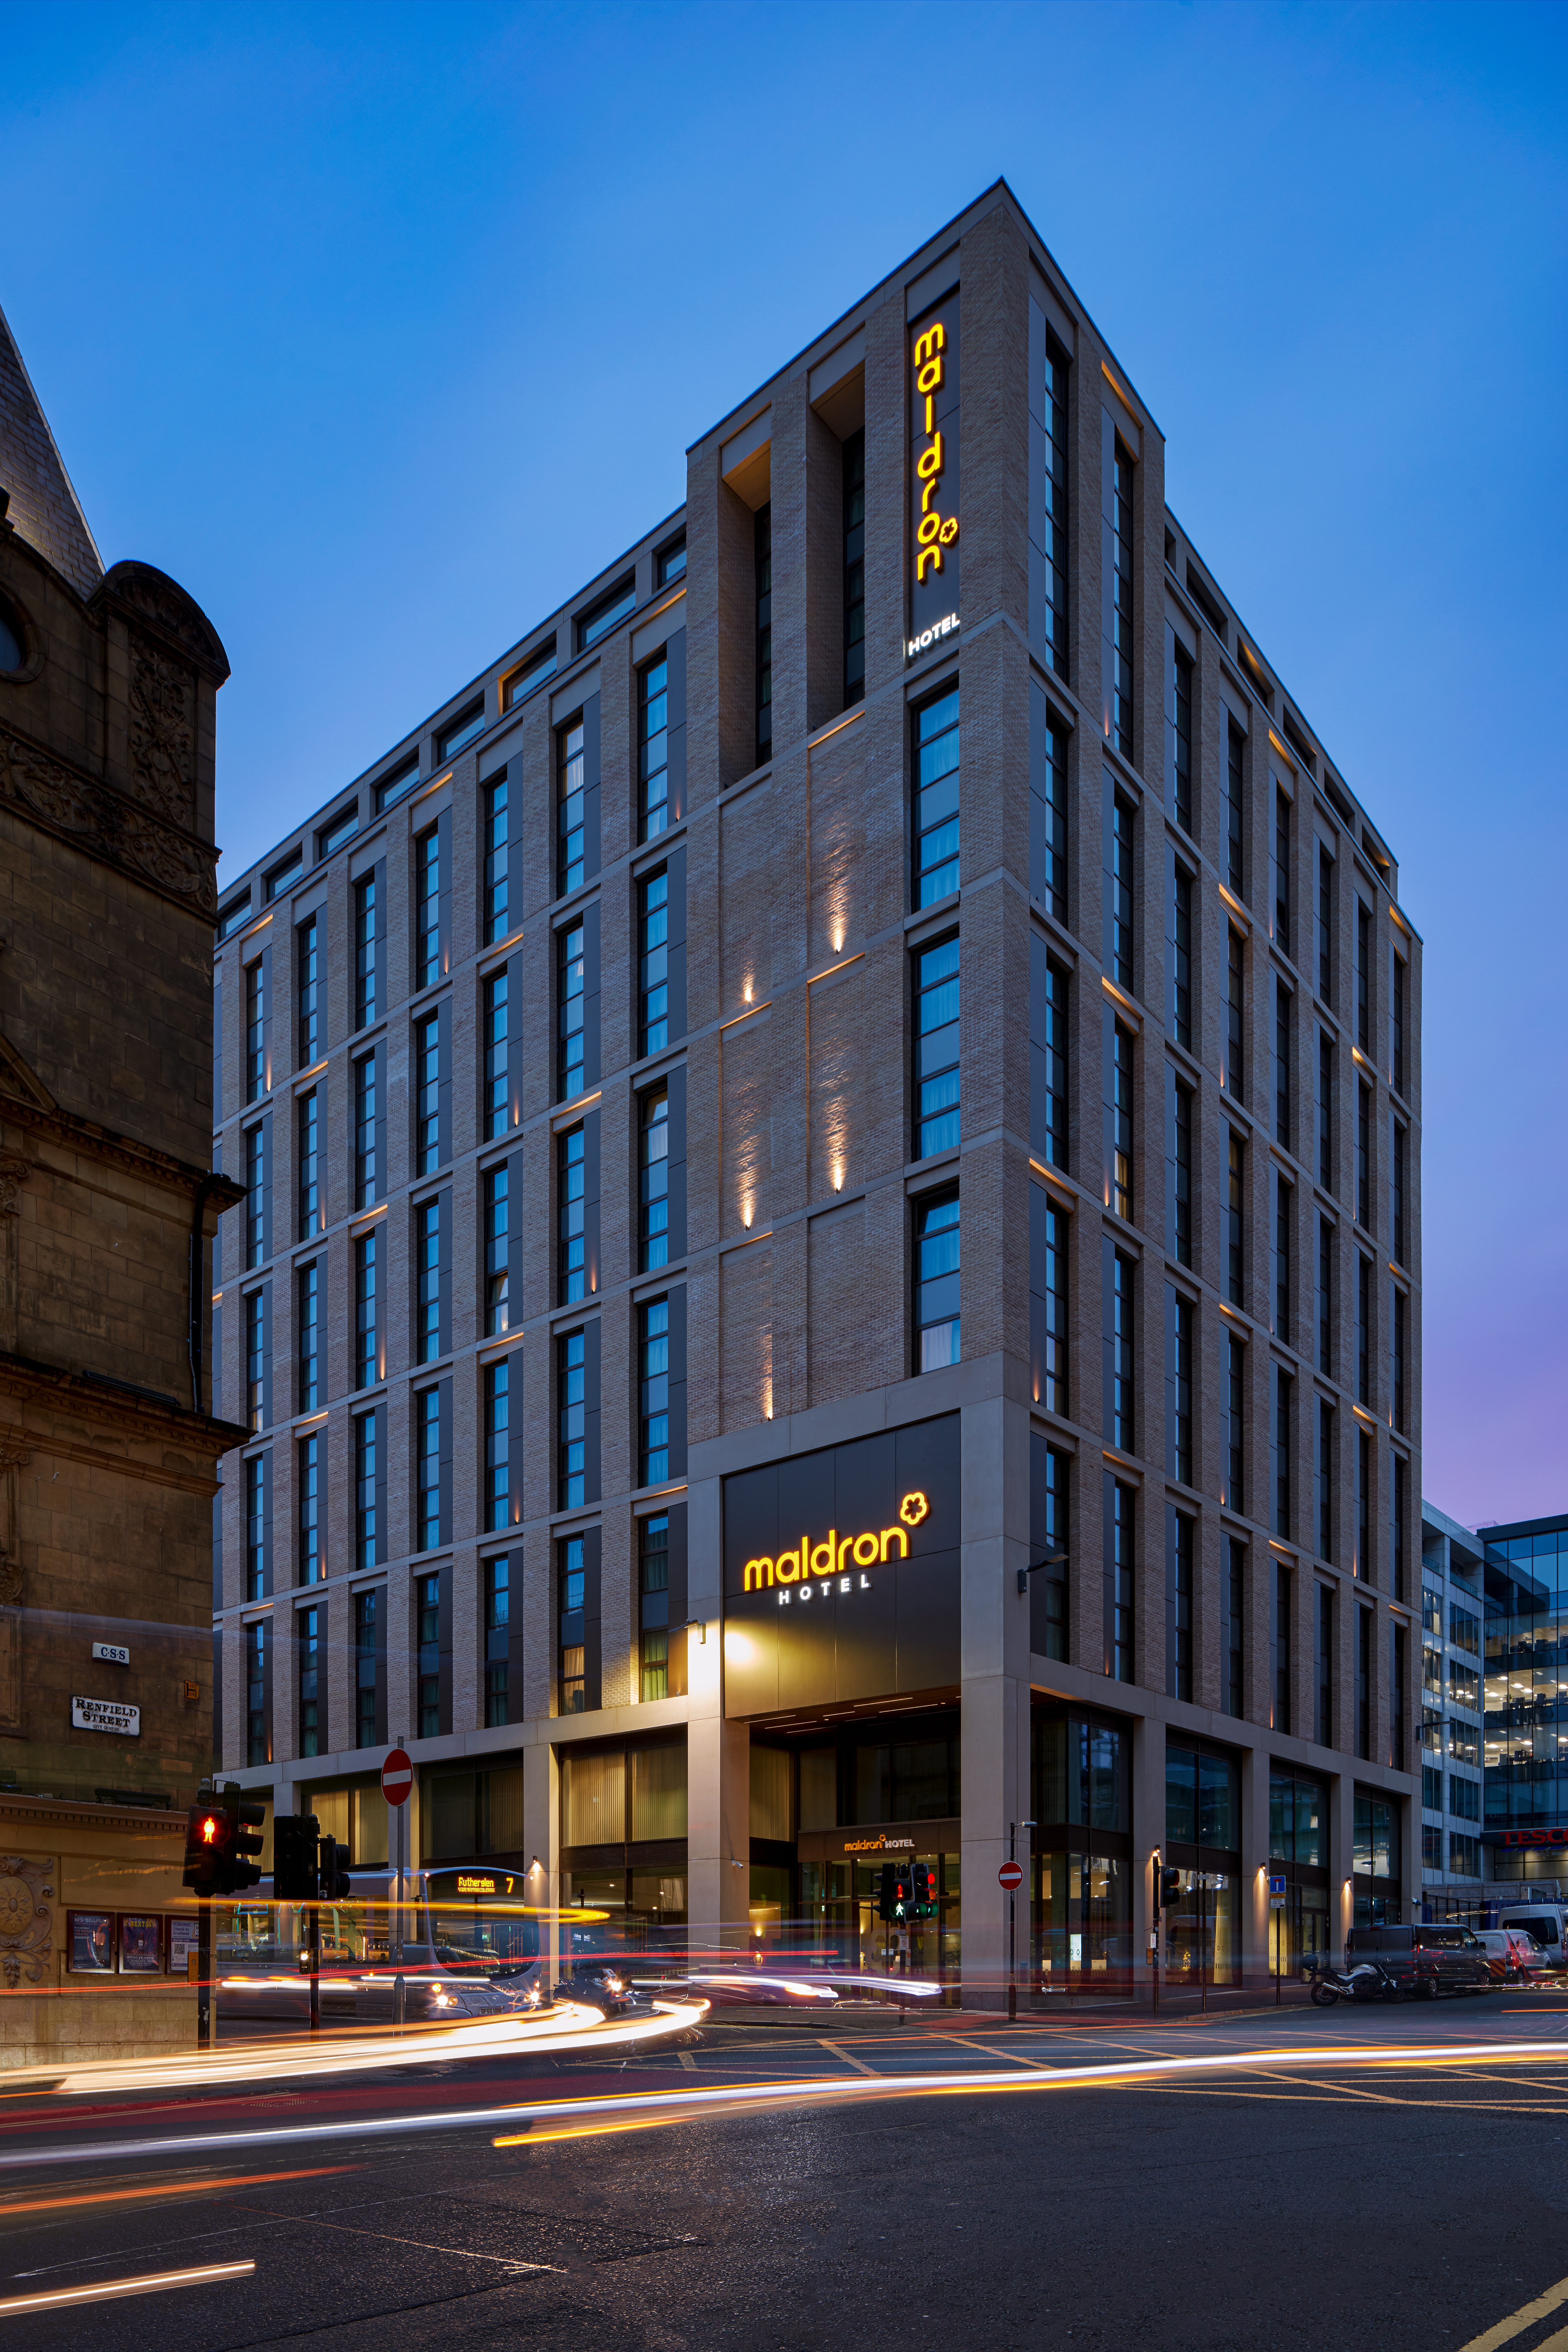 Images Maldron Hotel Glasgow City